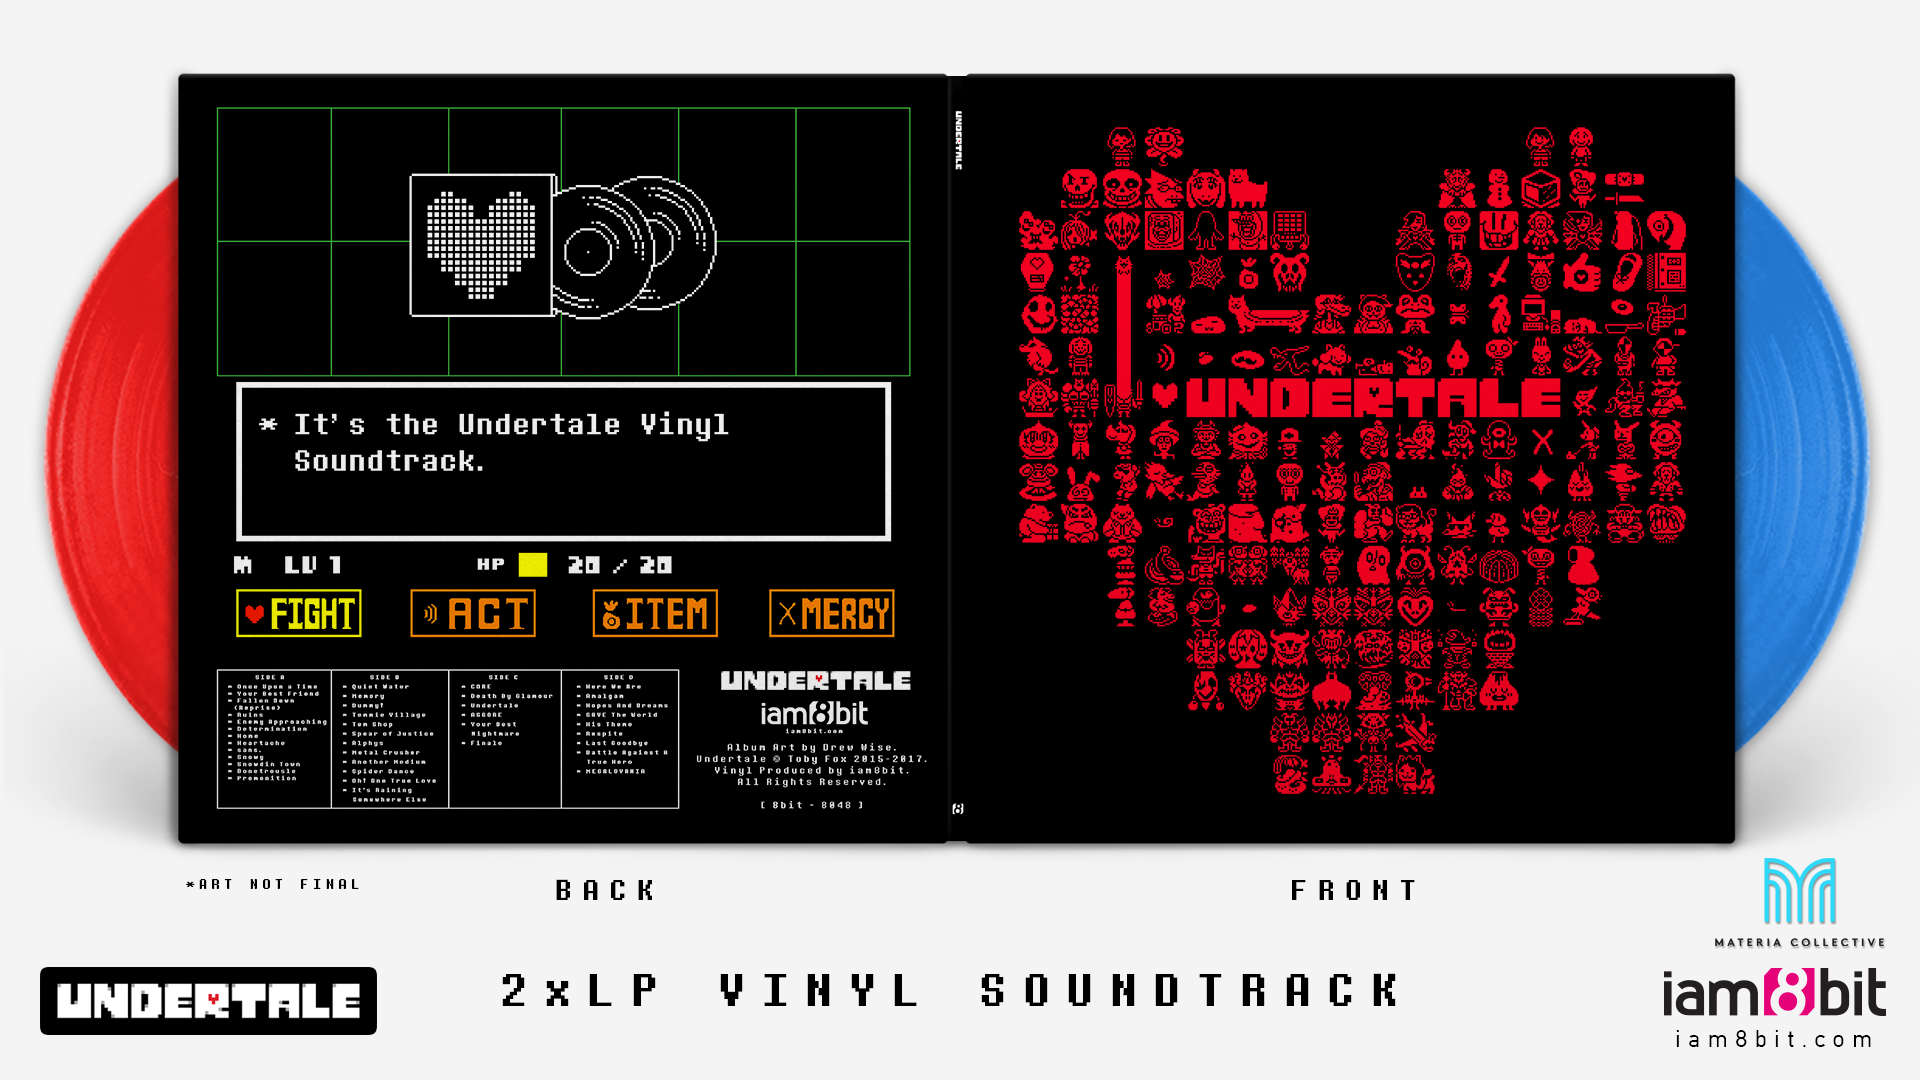 UNDERTALE Soundtrack - Album by Toby Fox